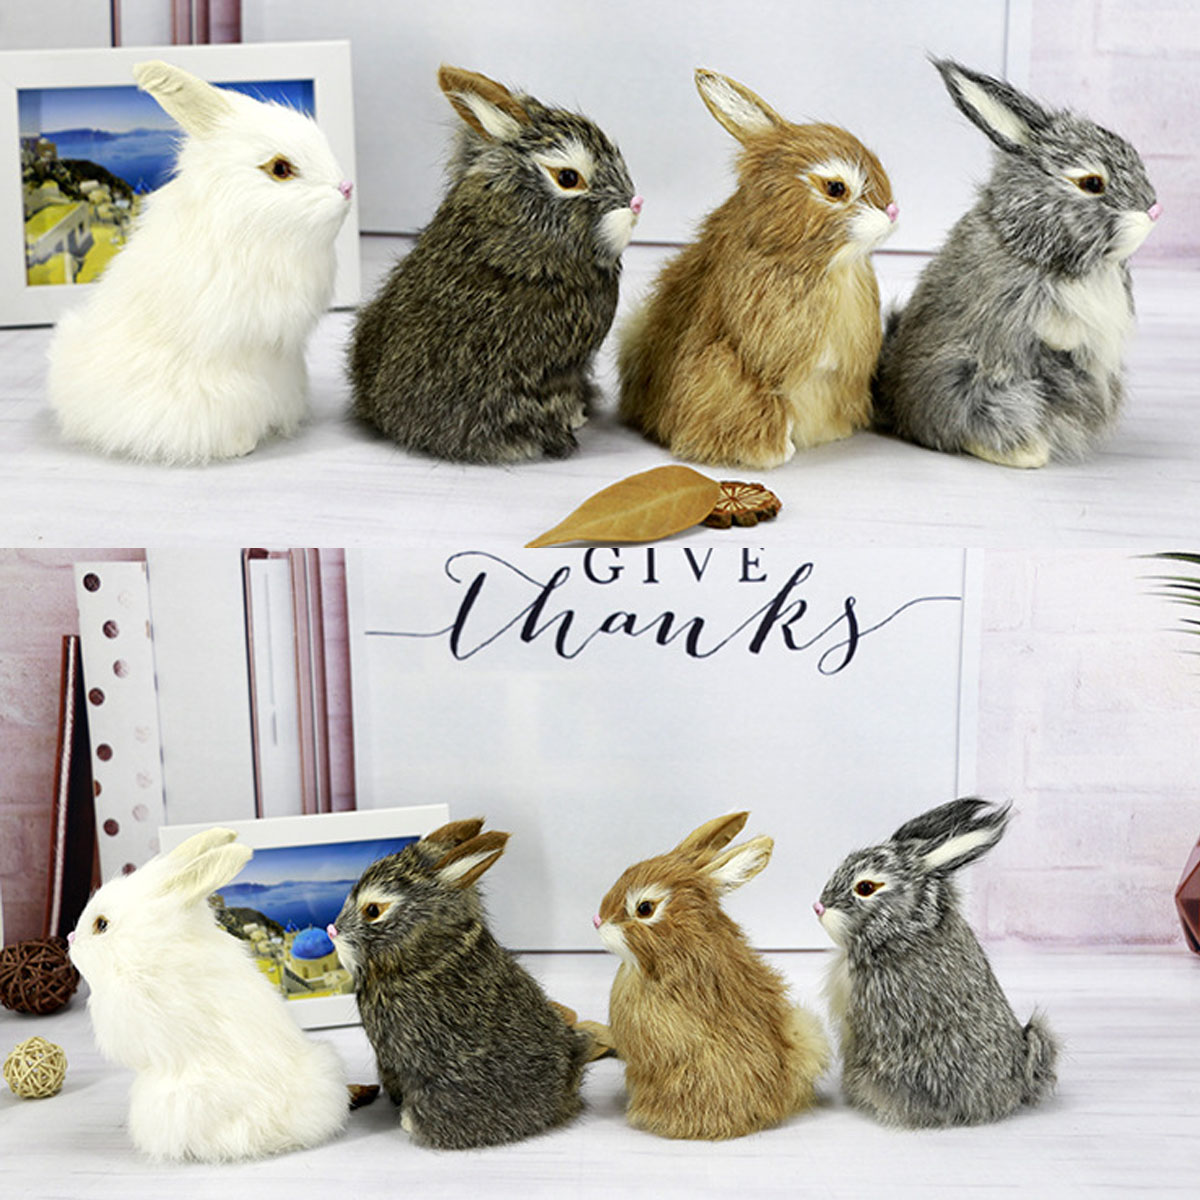 GrayYellowBrownWhite-Rabbits-Handmade-Easter-Bunnies-Home-Decorations-Desktop-Ornament-1452976-1